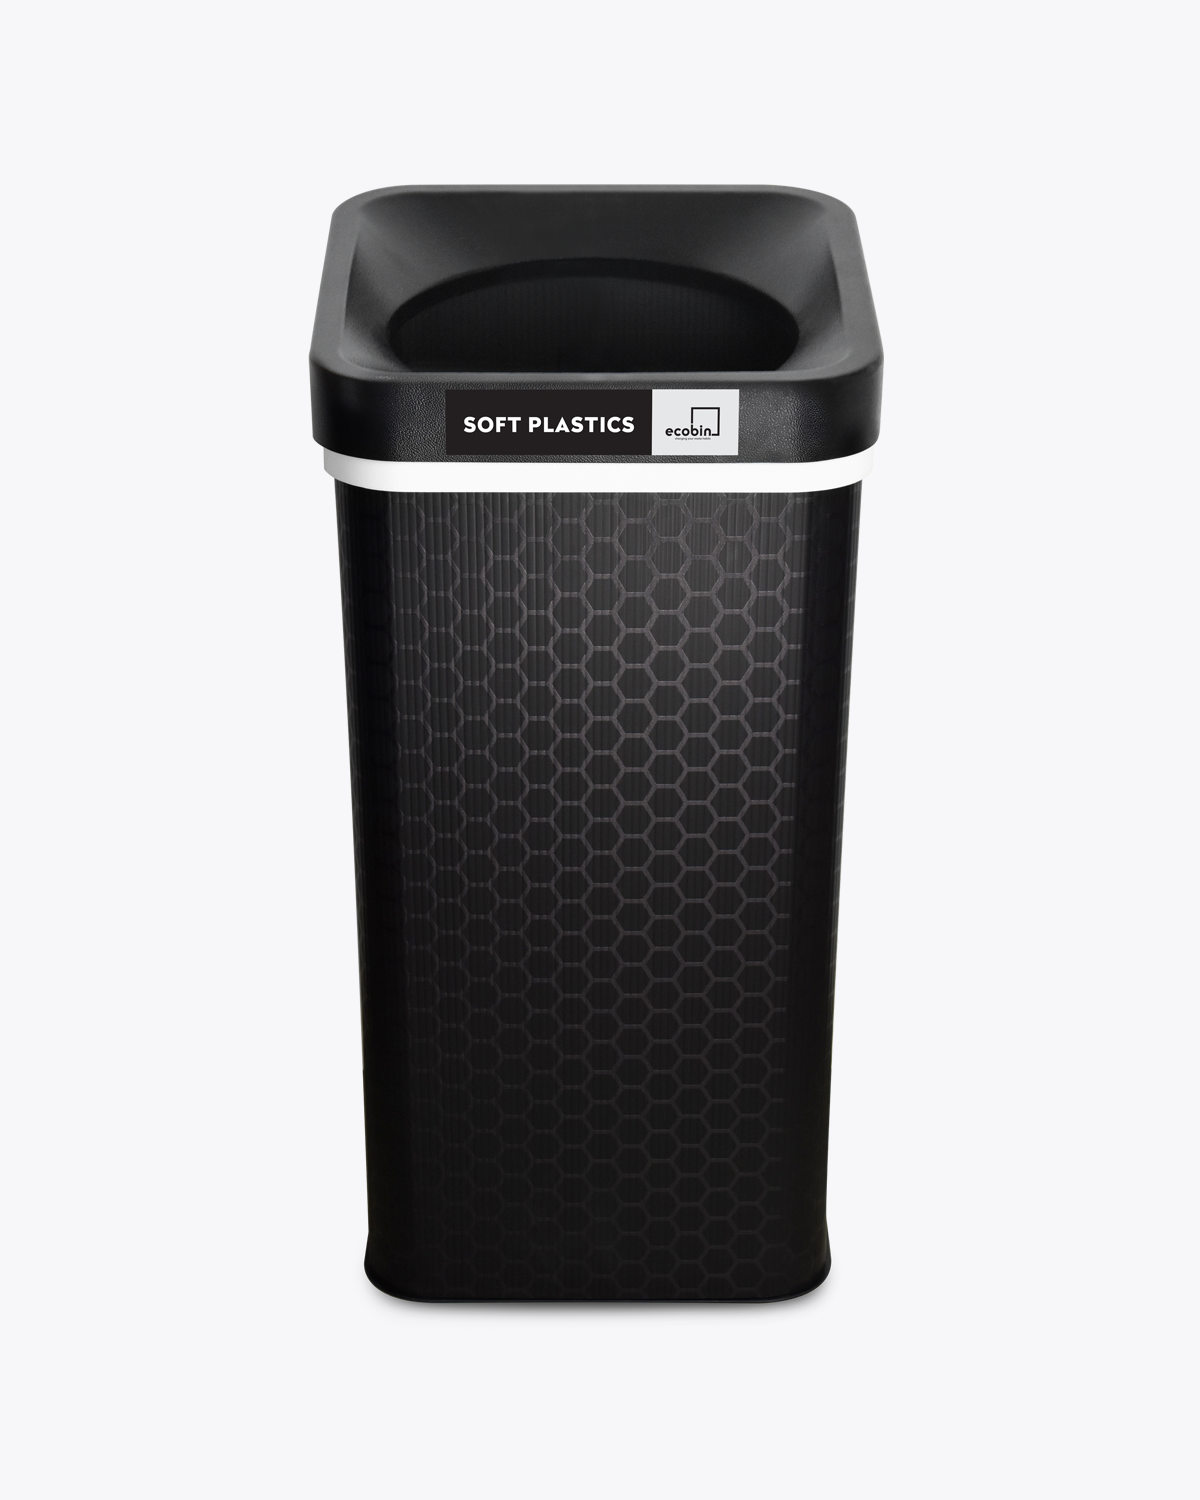 Soft Plastics Recycling FLIP Bin | Light Grey Ecobin | 60 Litre